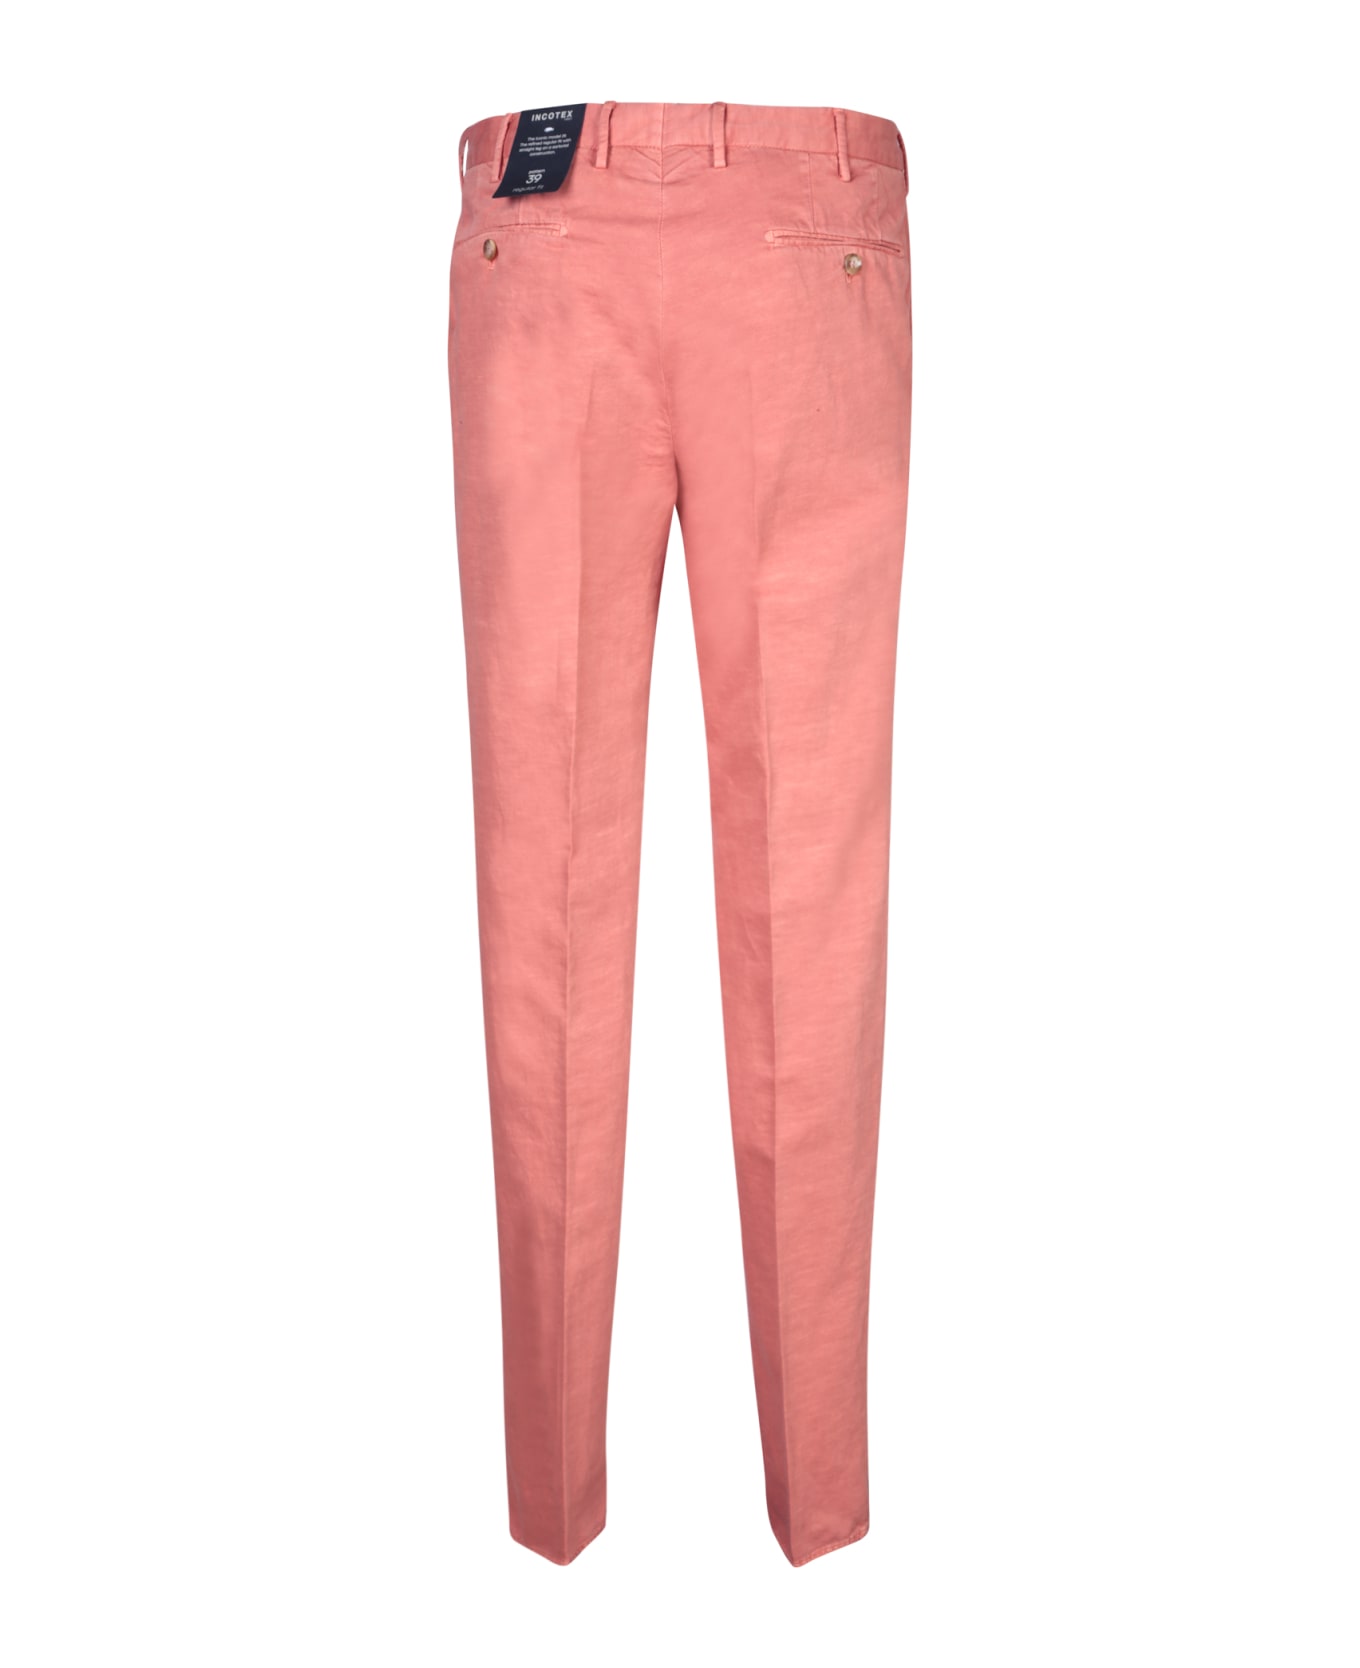 Incotex Pink Chino Linen Trousers - Pink